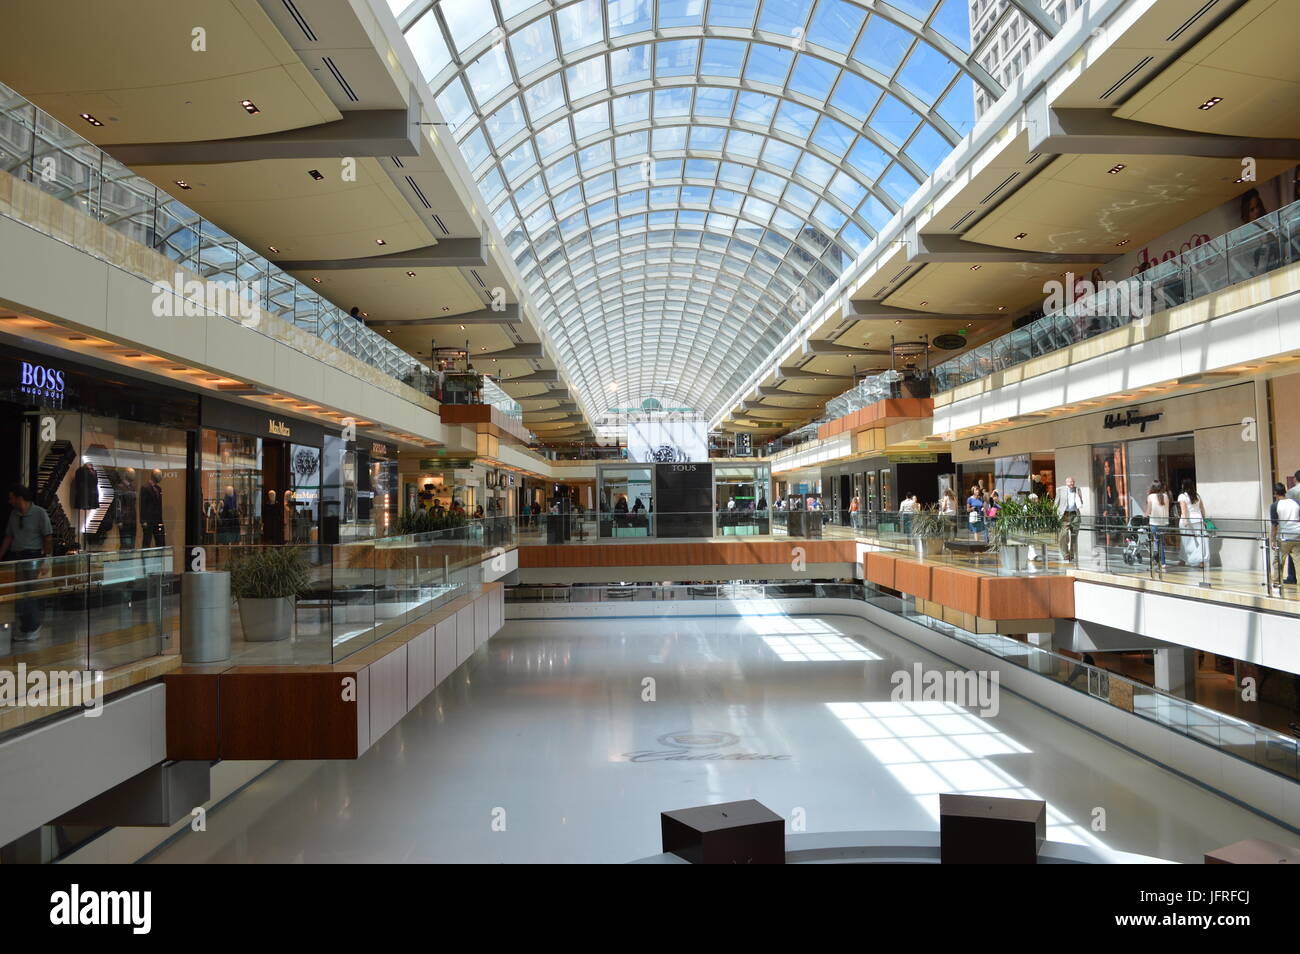 Galleria Mall, Houston Stock Photo, Royalty Free Image: 147419794 - Alamy